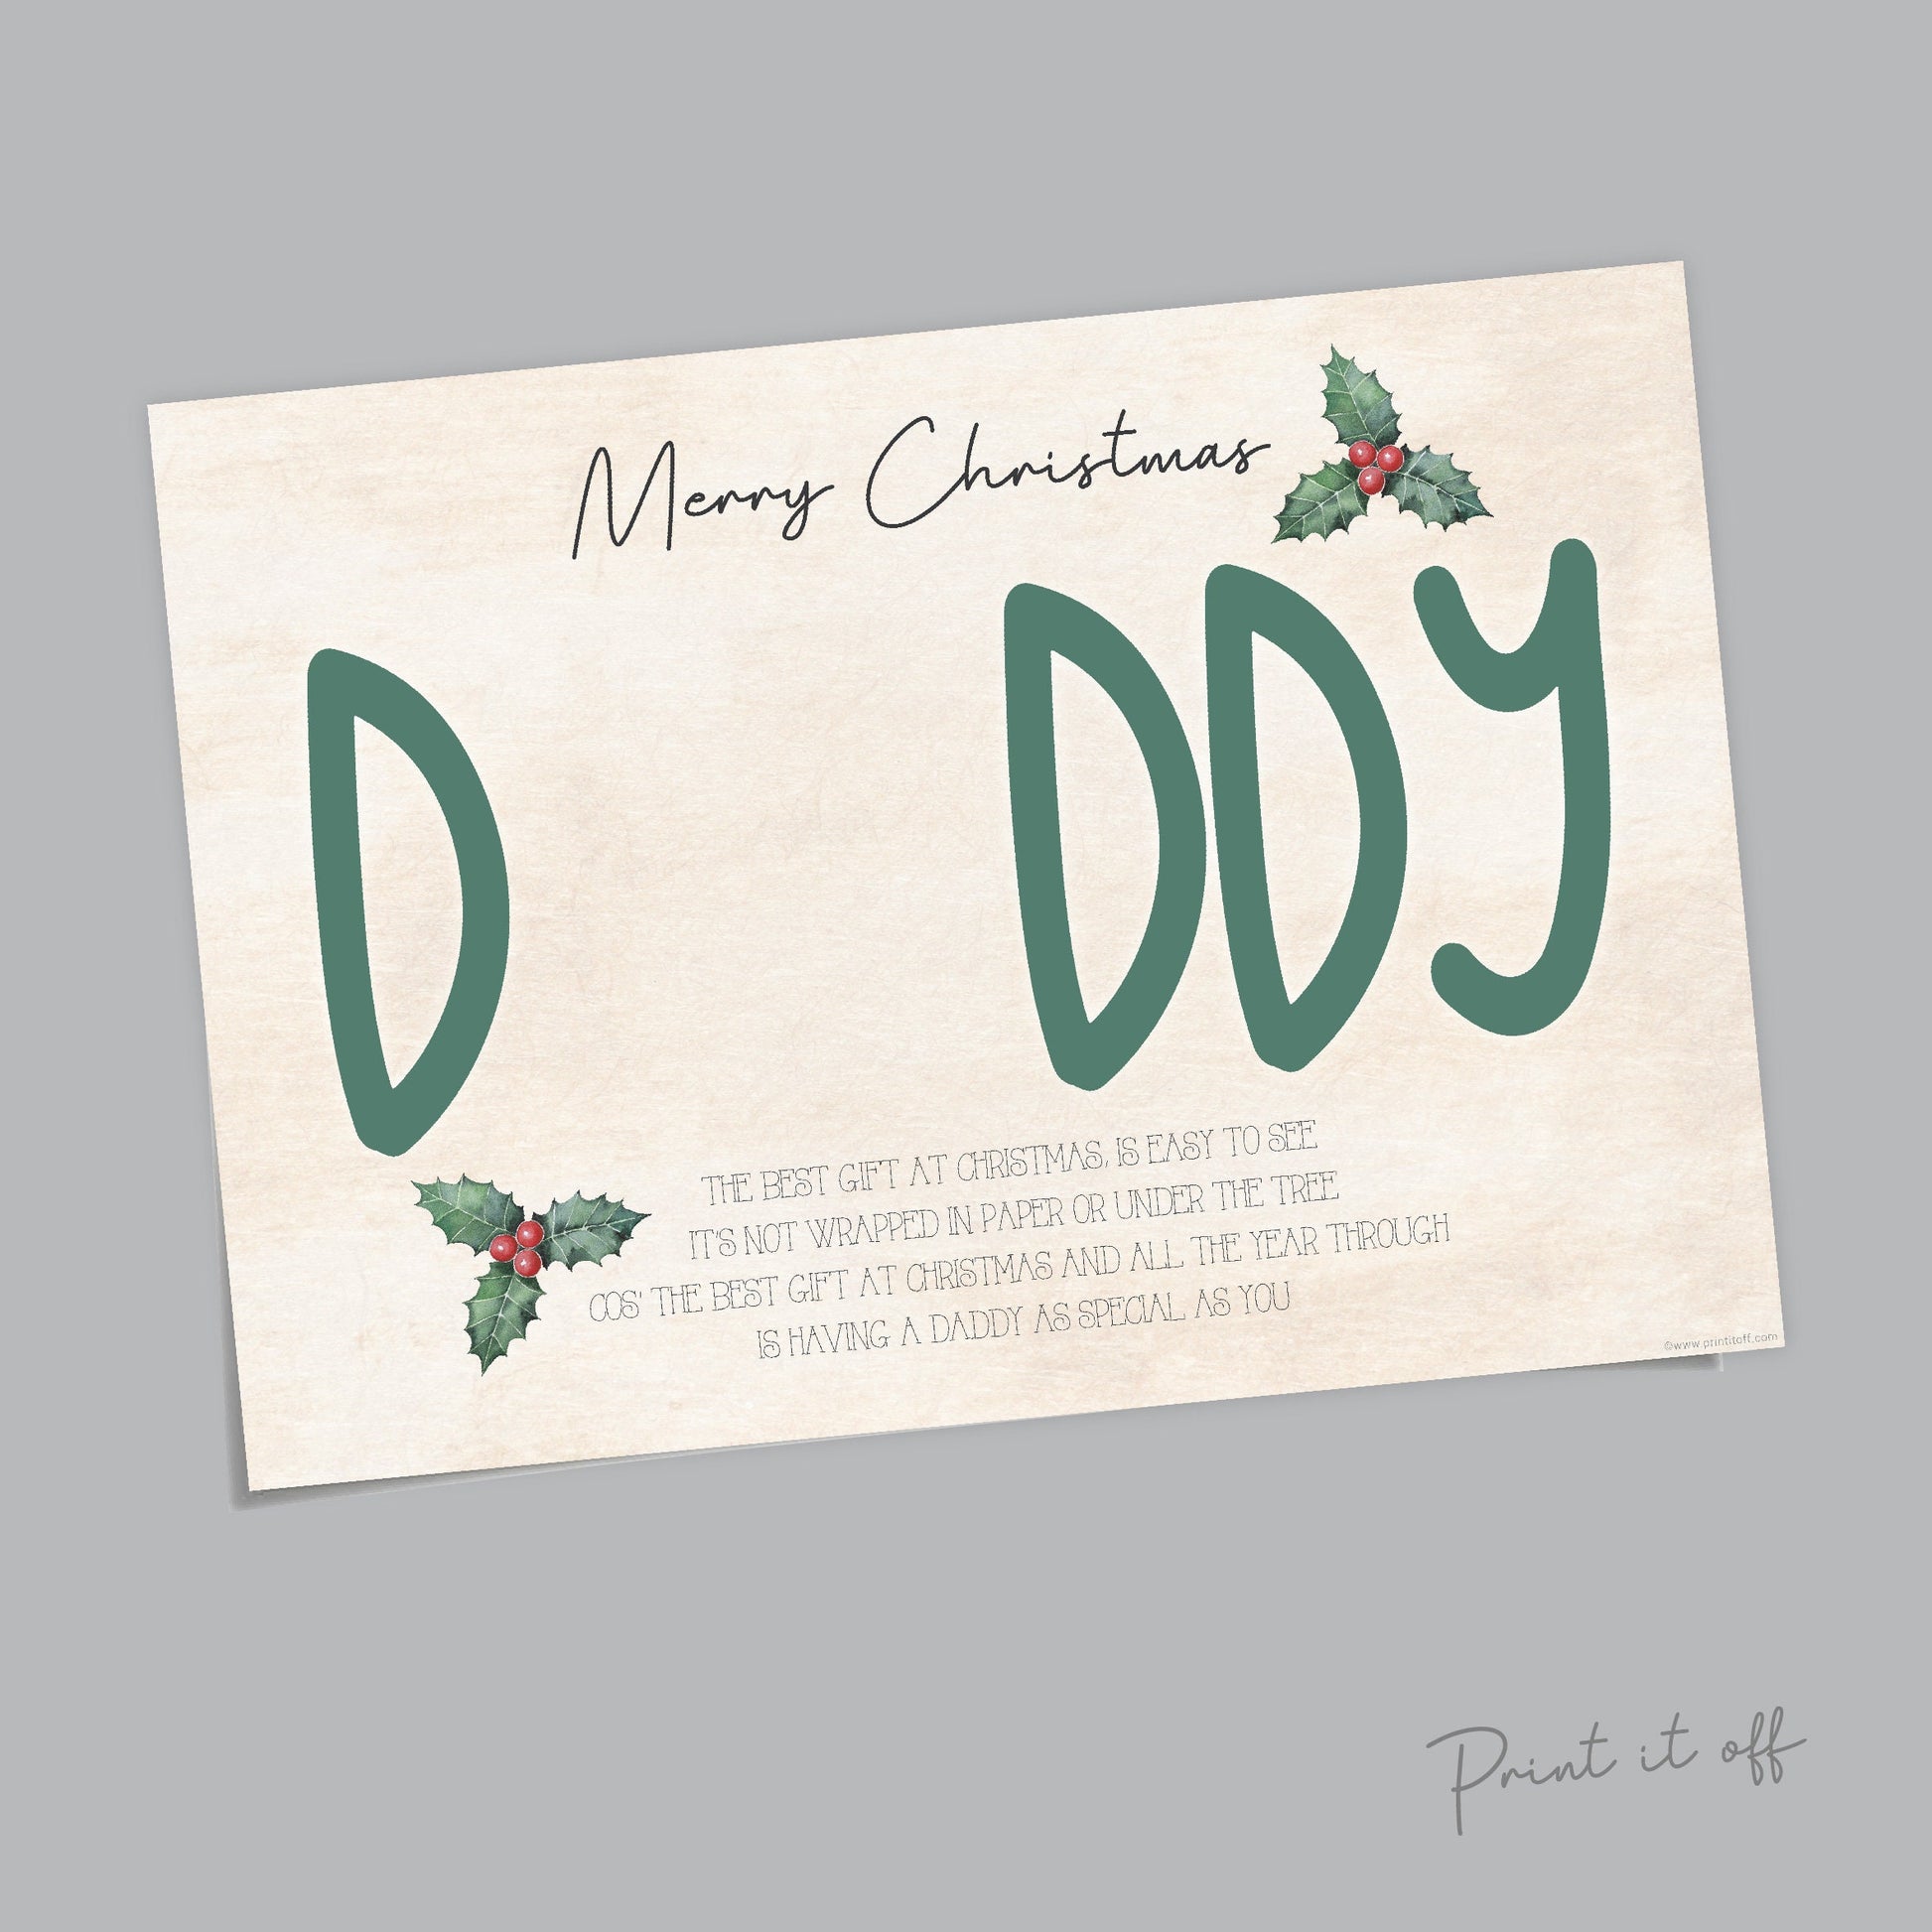 Daddy Dad Handprint Art Card / Christmas Xmas Handprint Craft / Baby Kids Toddler Hands Hand / First Xmas Keepsake Memory Print 0351